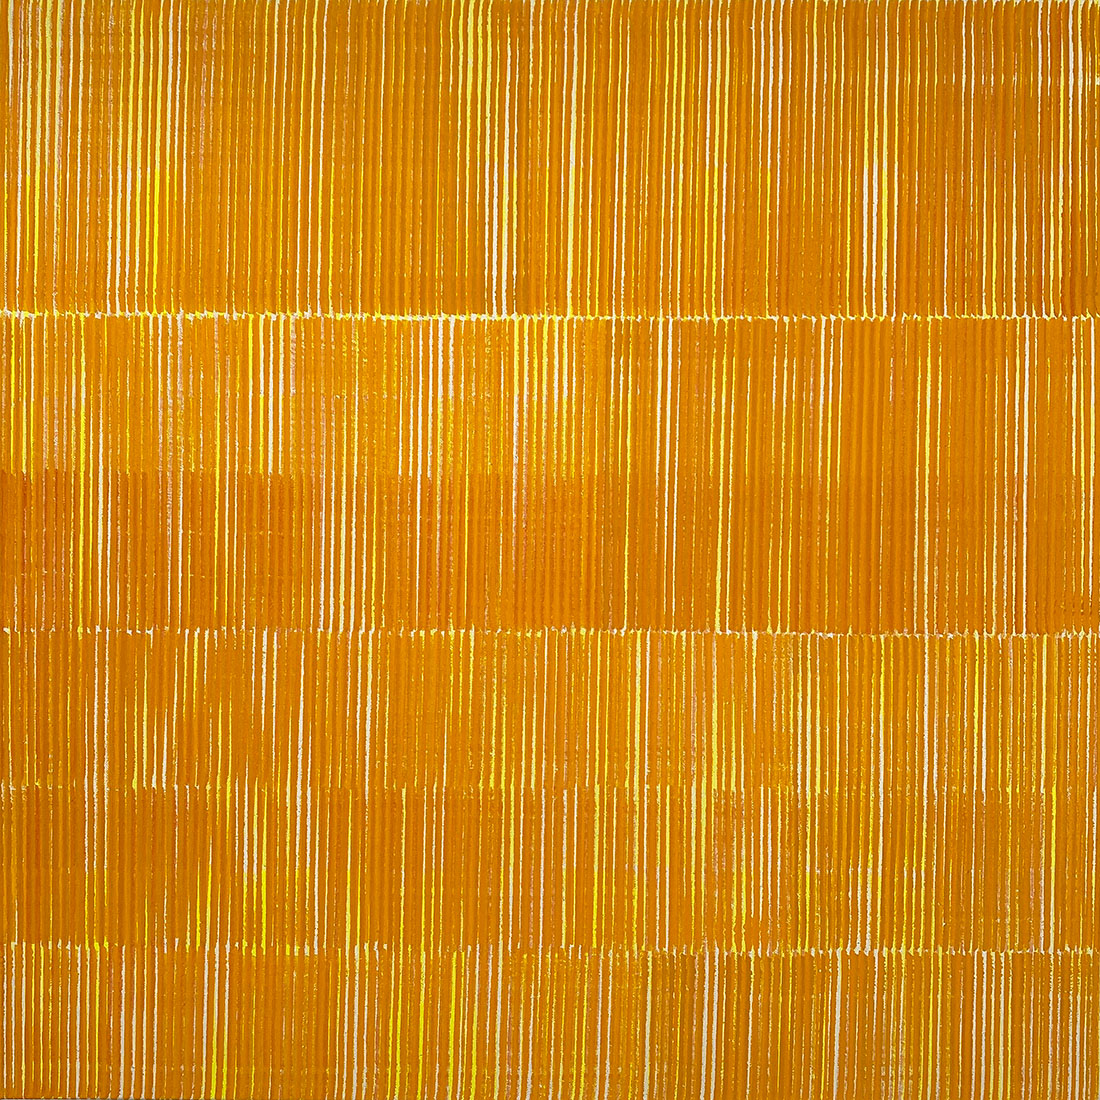 Nikola Dimitrov, FarbKlang gelb I, 2021, Pigmente, Bindemittel auf Leinwand, 70 × 70 cm